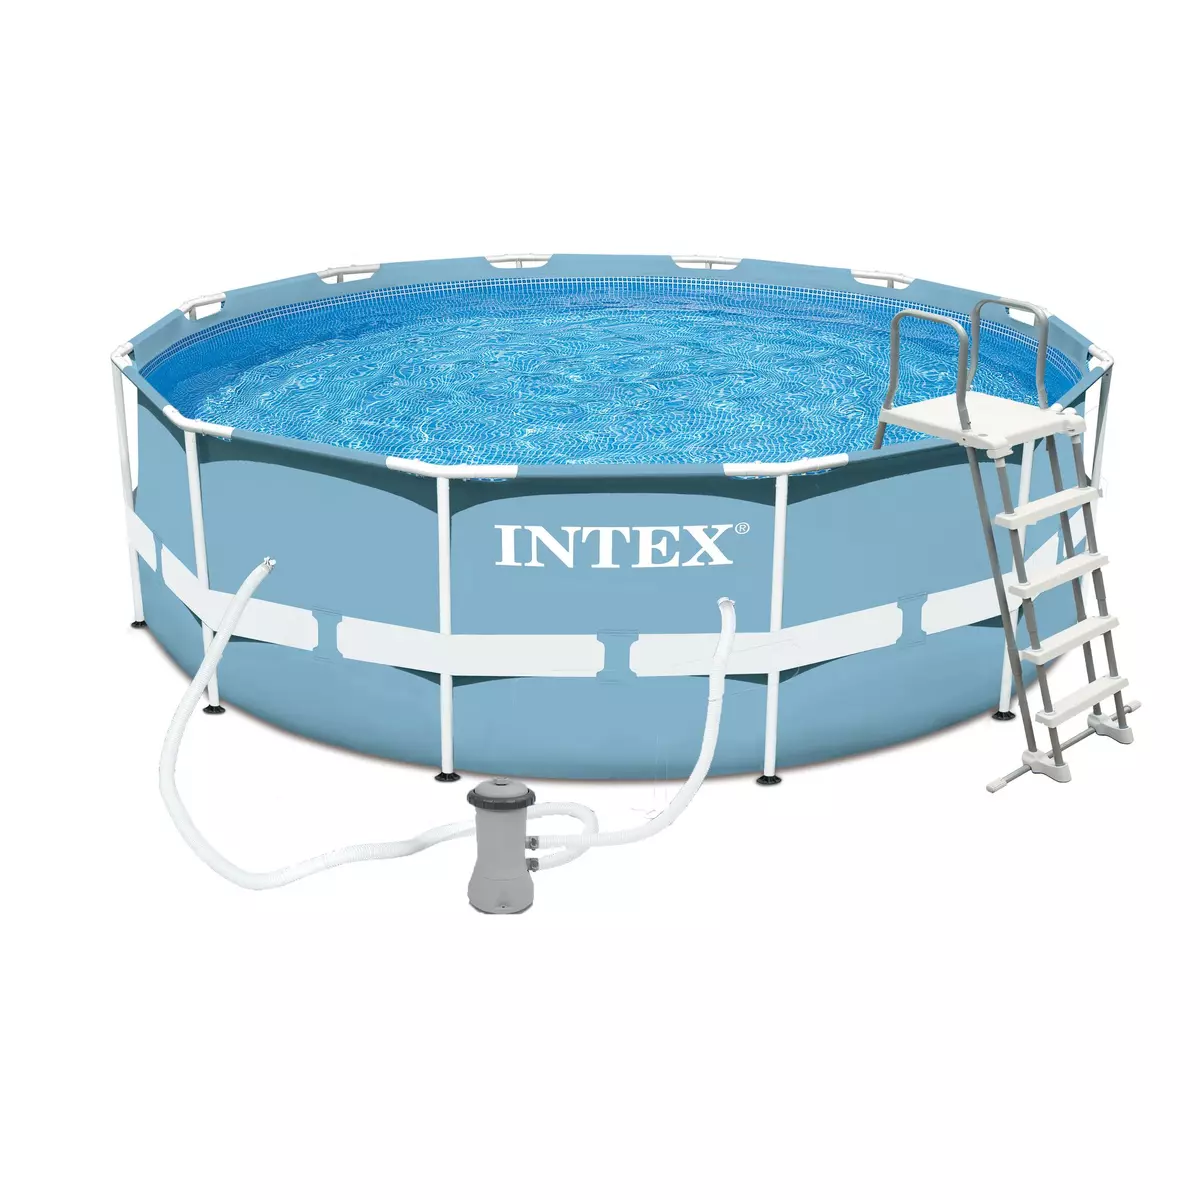 INTEX Kit piscine tubulaire ronde Prism